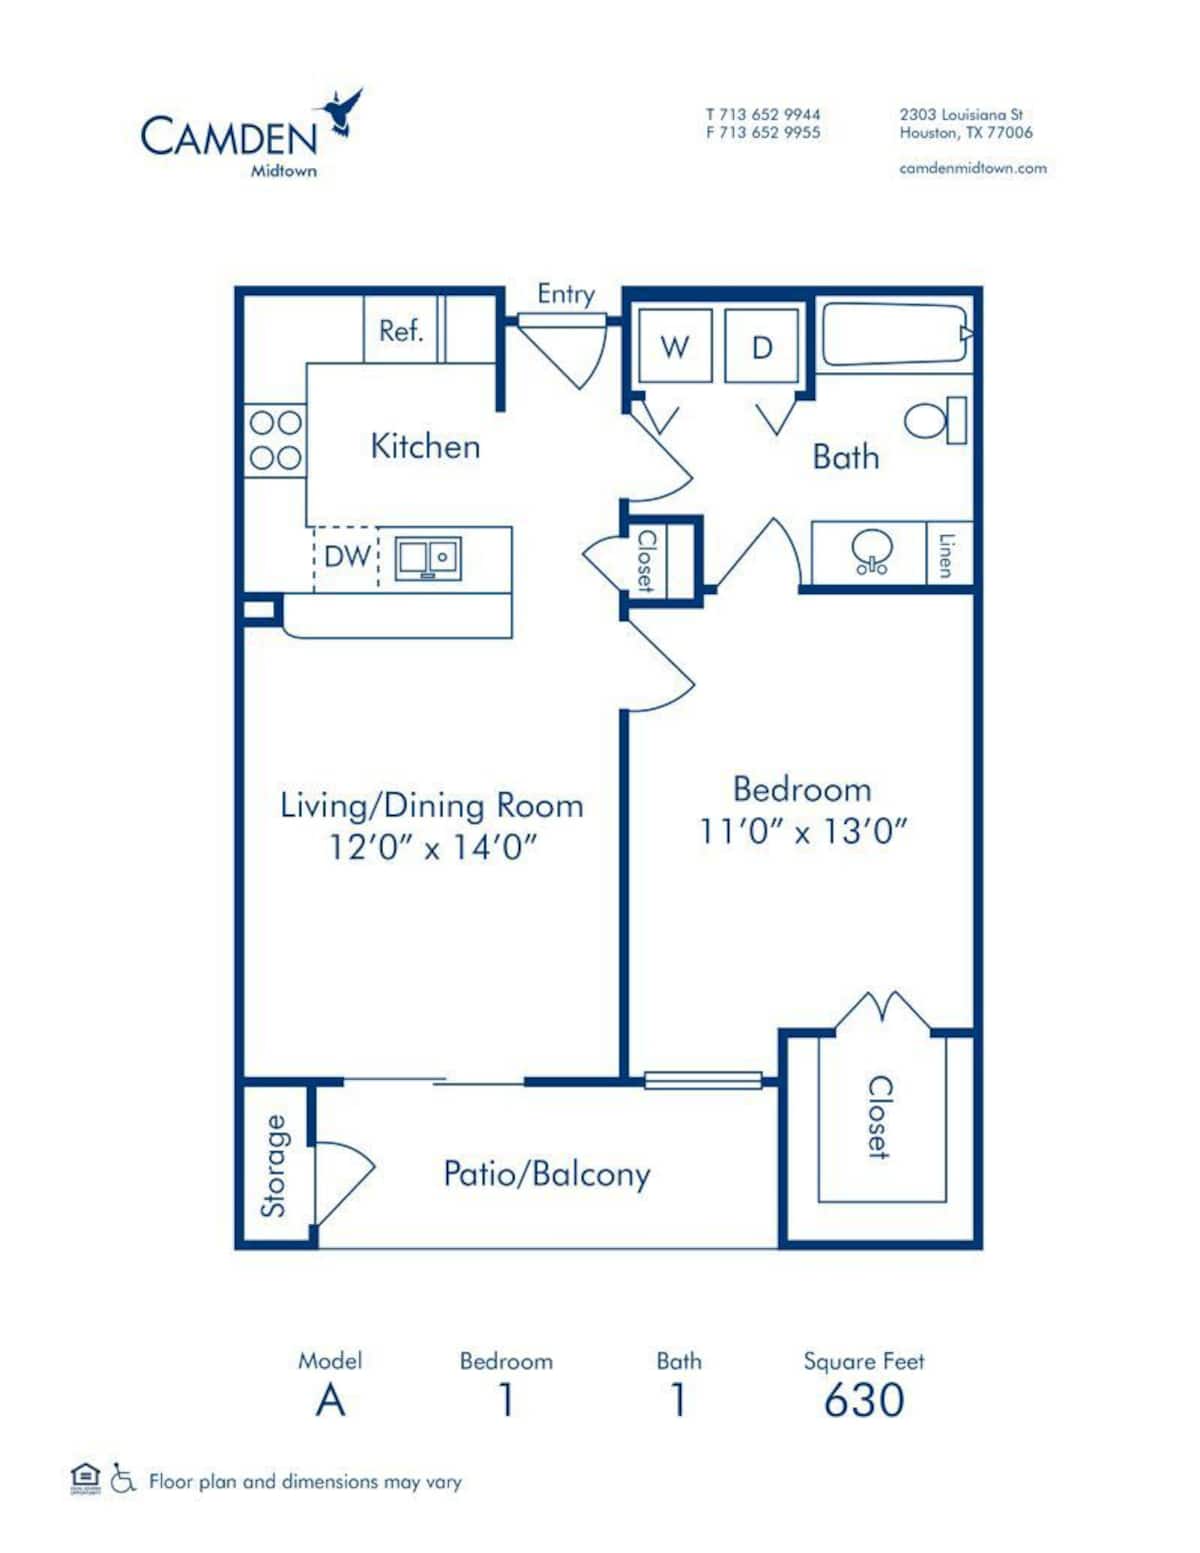 Floorplan diagram for A, showing 1 bedroom